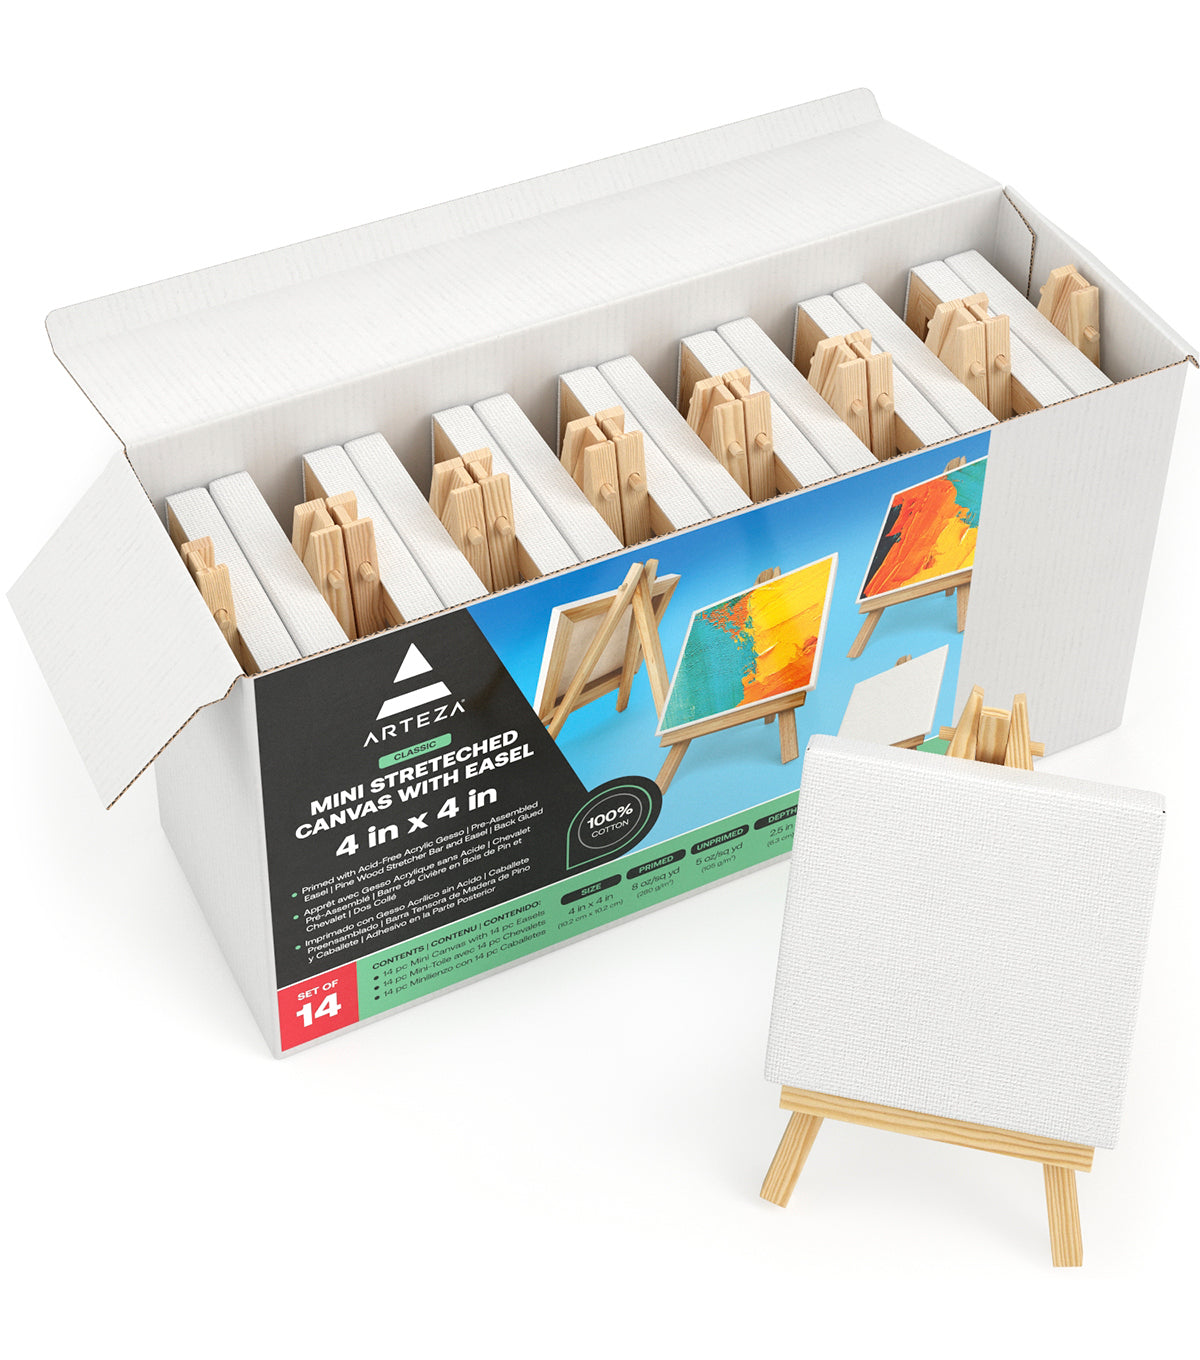  AUREUO Mini Stretched Canvas - 4x4 Inch/24 Pack - 2/5